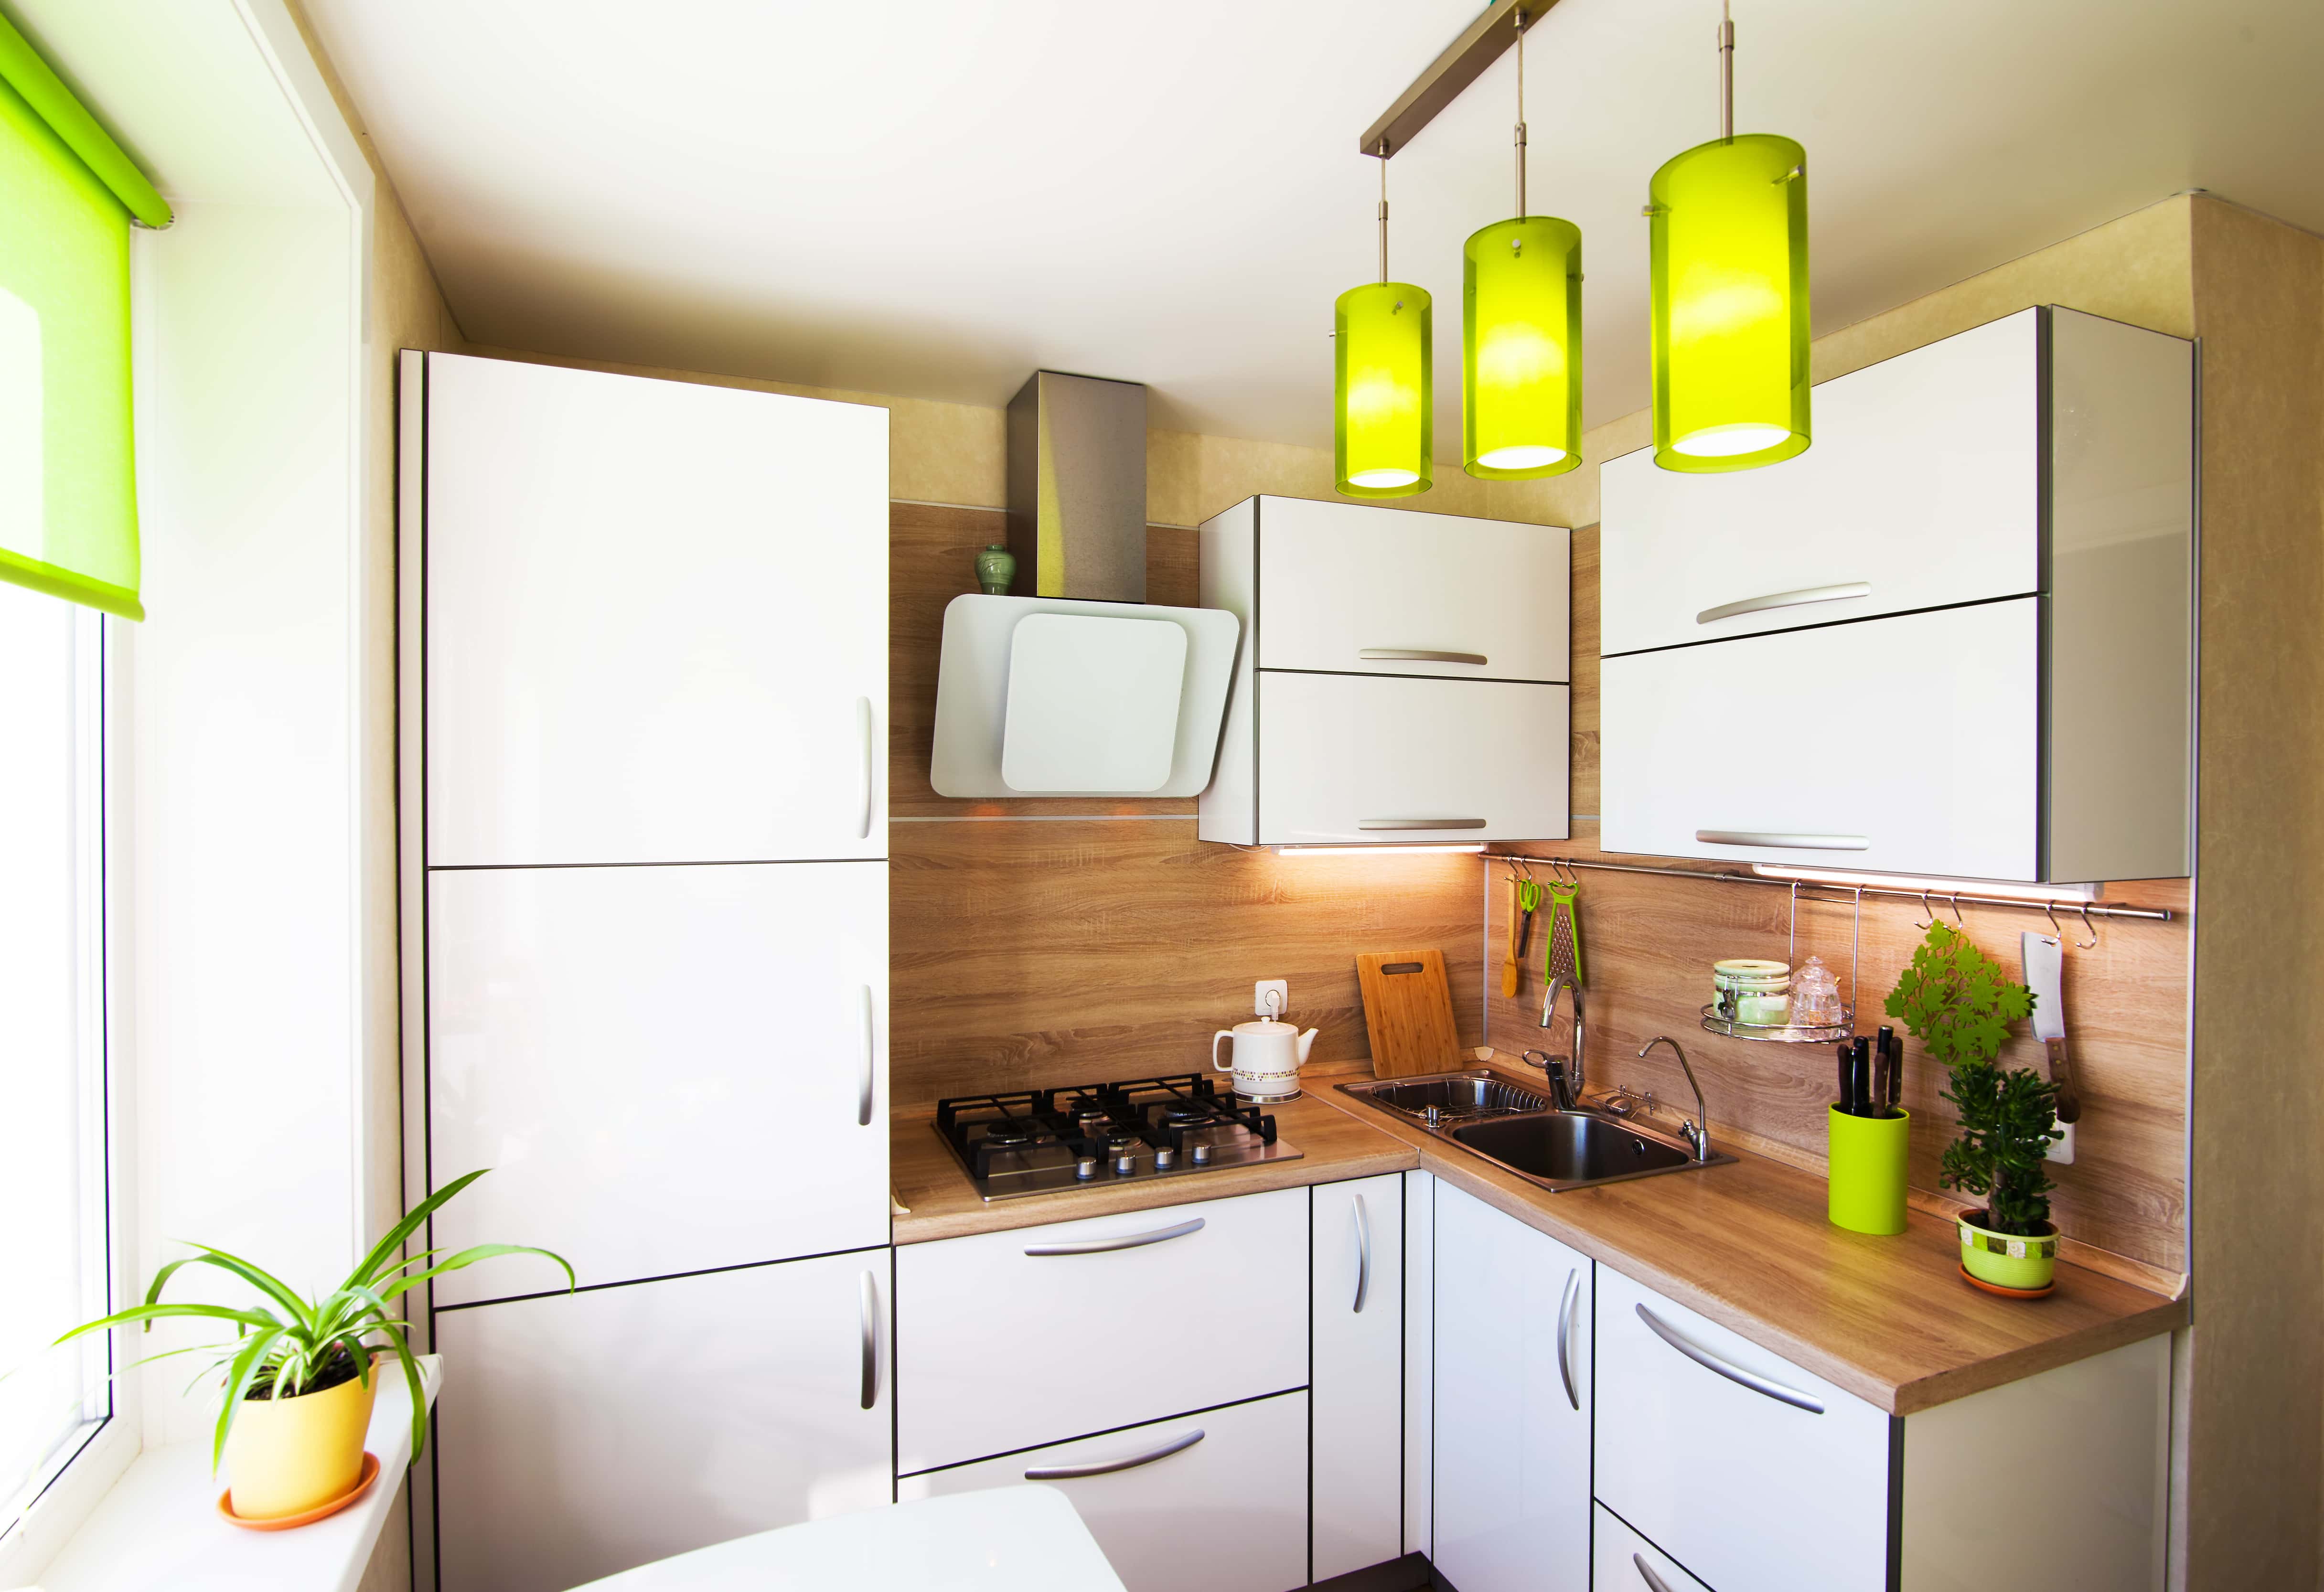 12 Trendy Modular Kitchen Design Ideas For Small Kitchens Homelane Blog